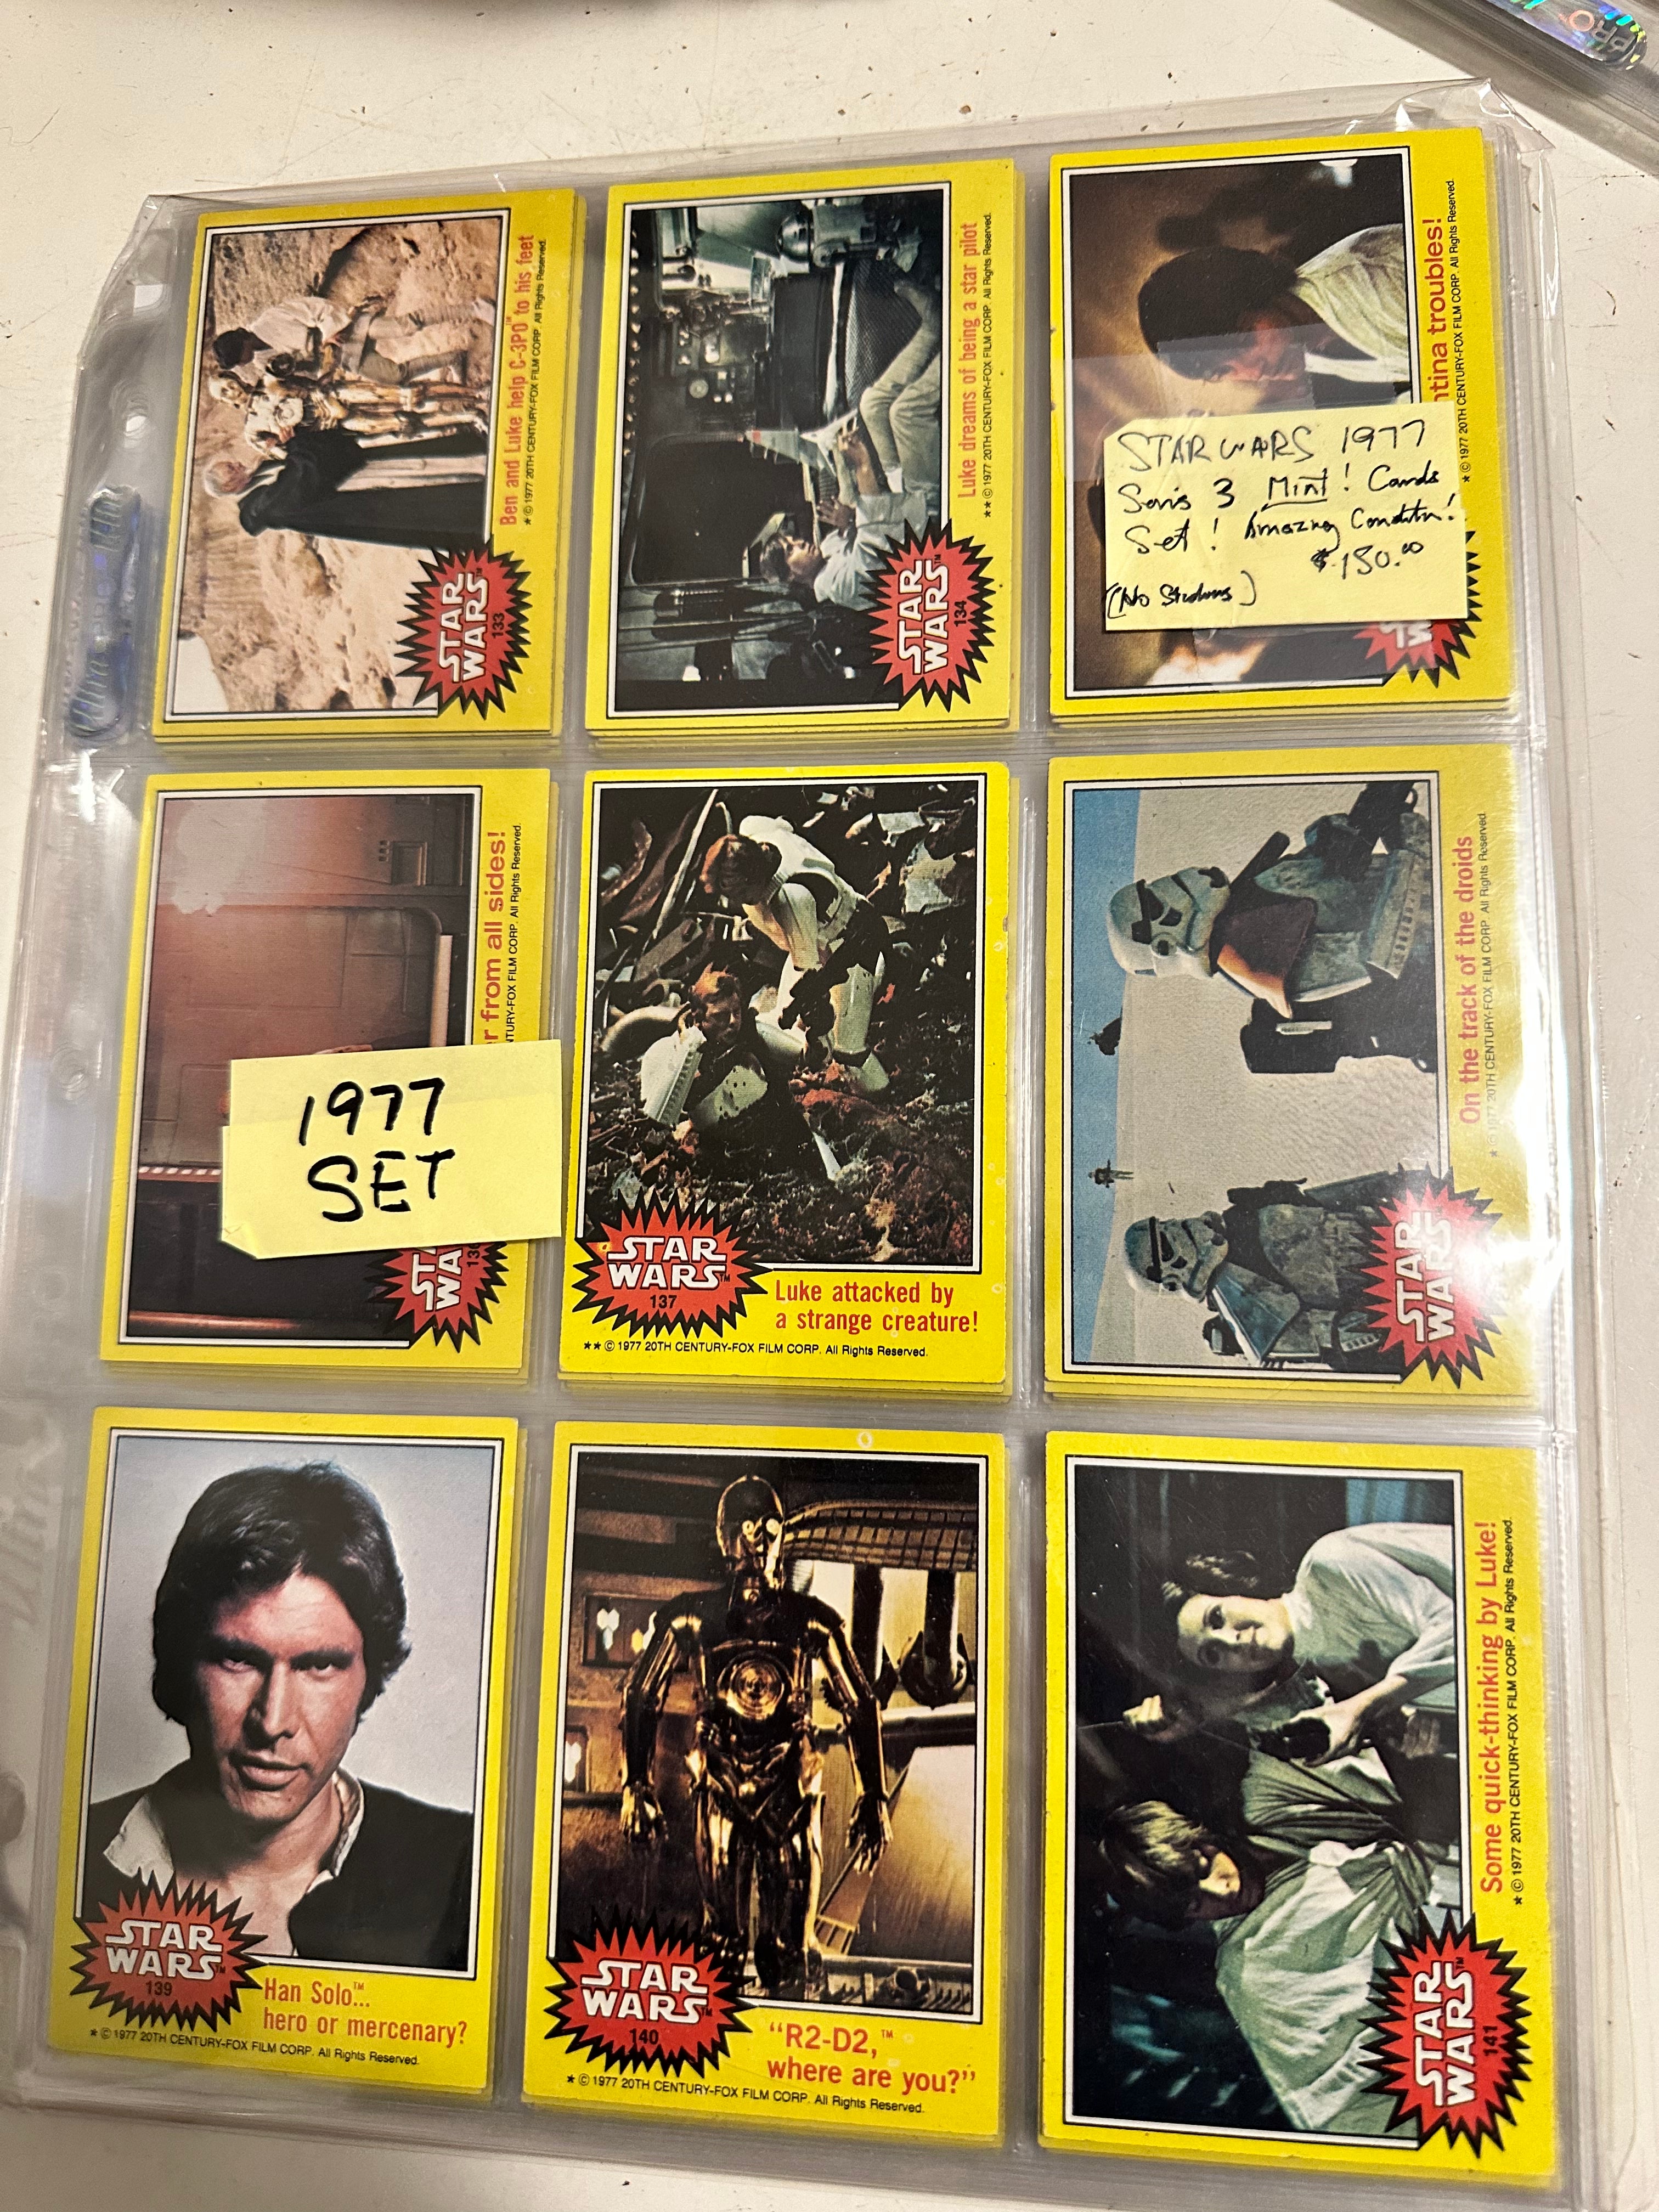 Star Wars series 3 cards set high grade condition 1977